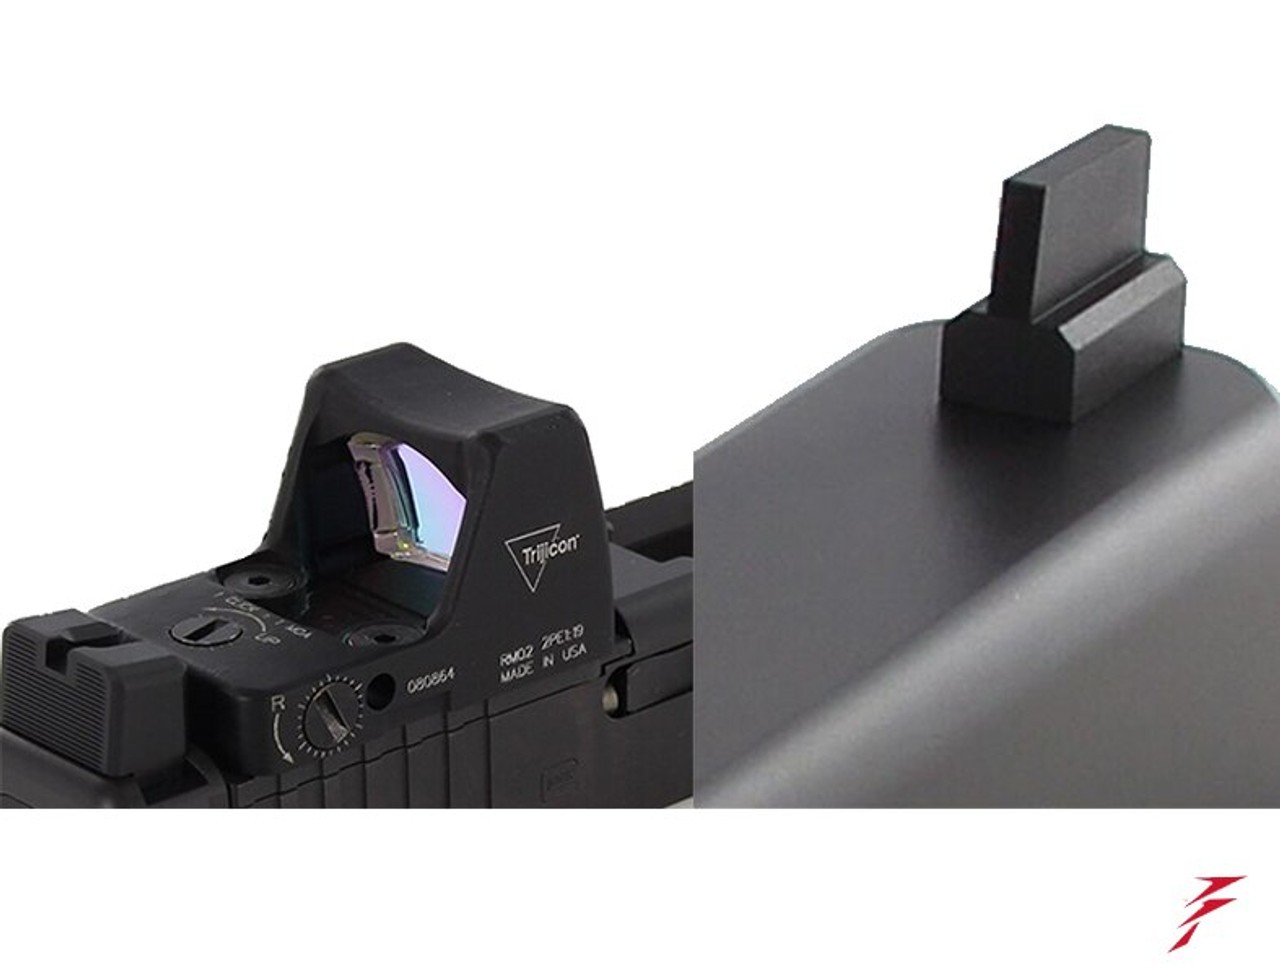 DP Sight Set, Black(R)/ Black(F) for Glock MOS Pistols, Fixed Co-Witness (Use w/Trijicon RMR sight or similar)